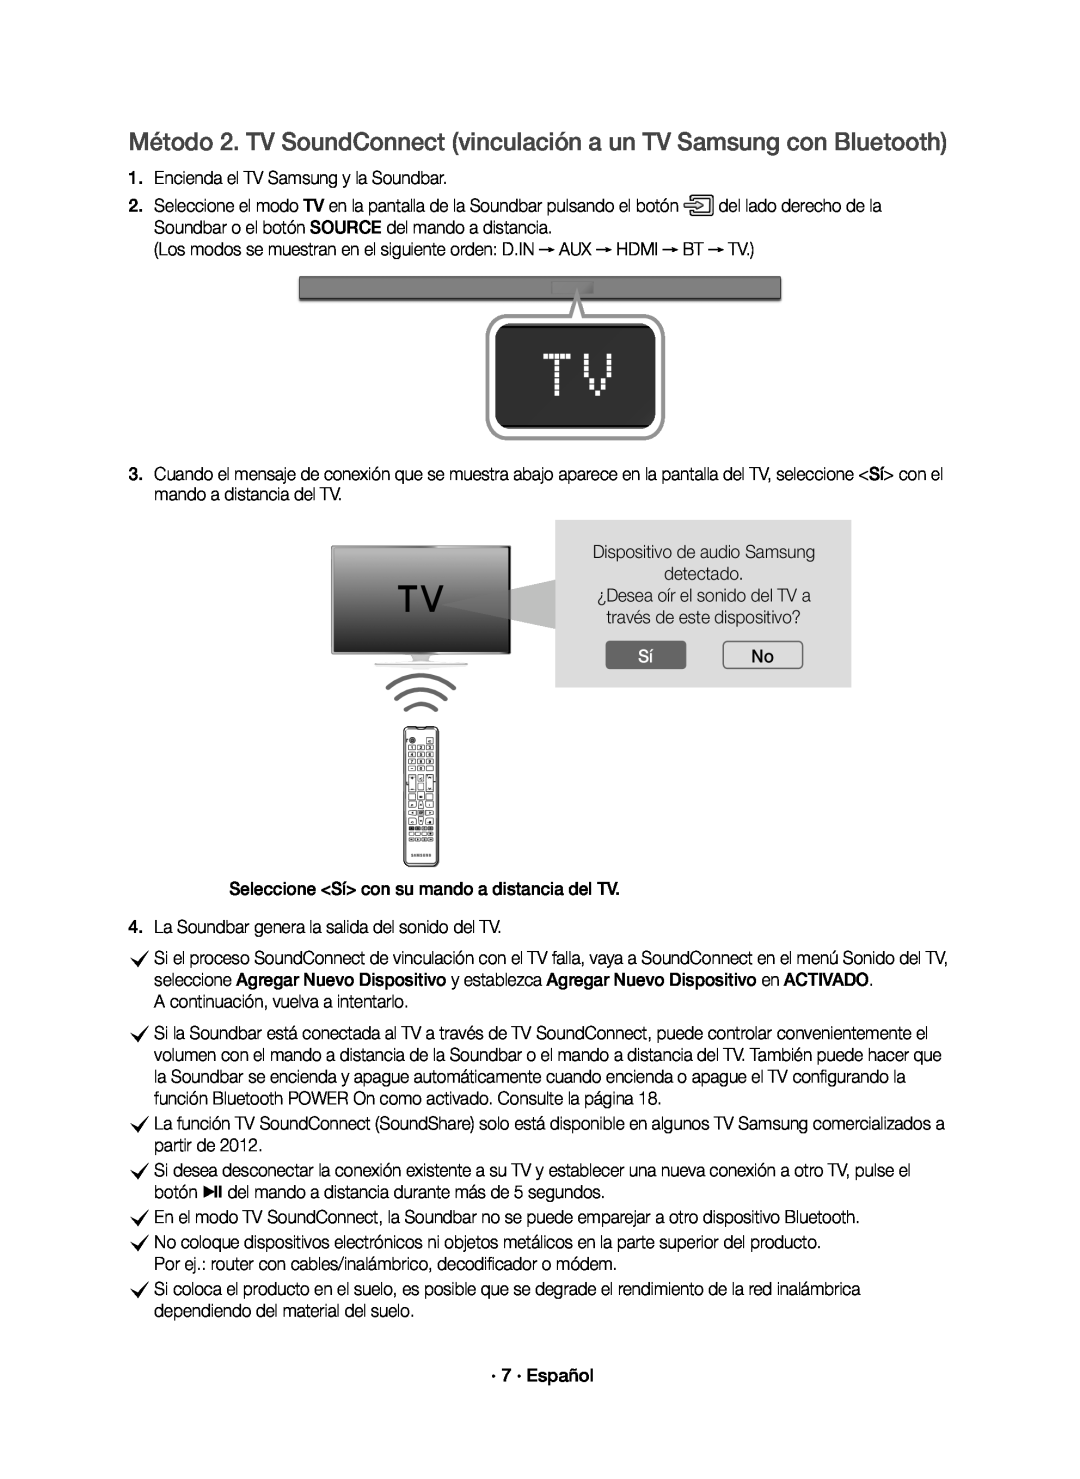 Samsung HW-K650/ZF, HW-K651/ZF manual Método 2. TV SoundConnect vinculación a un TV Samsung con Bluetooth, SíNo 